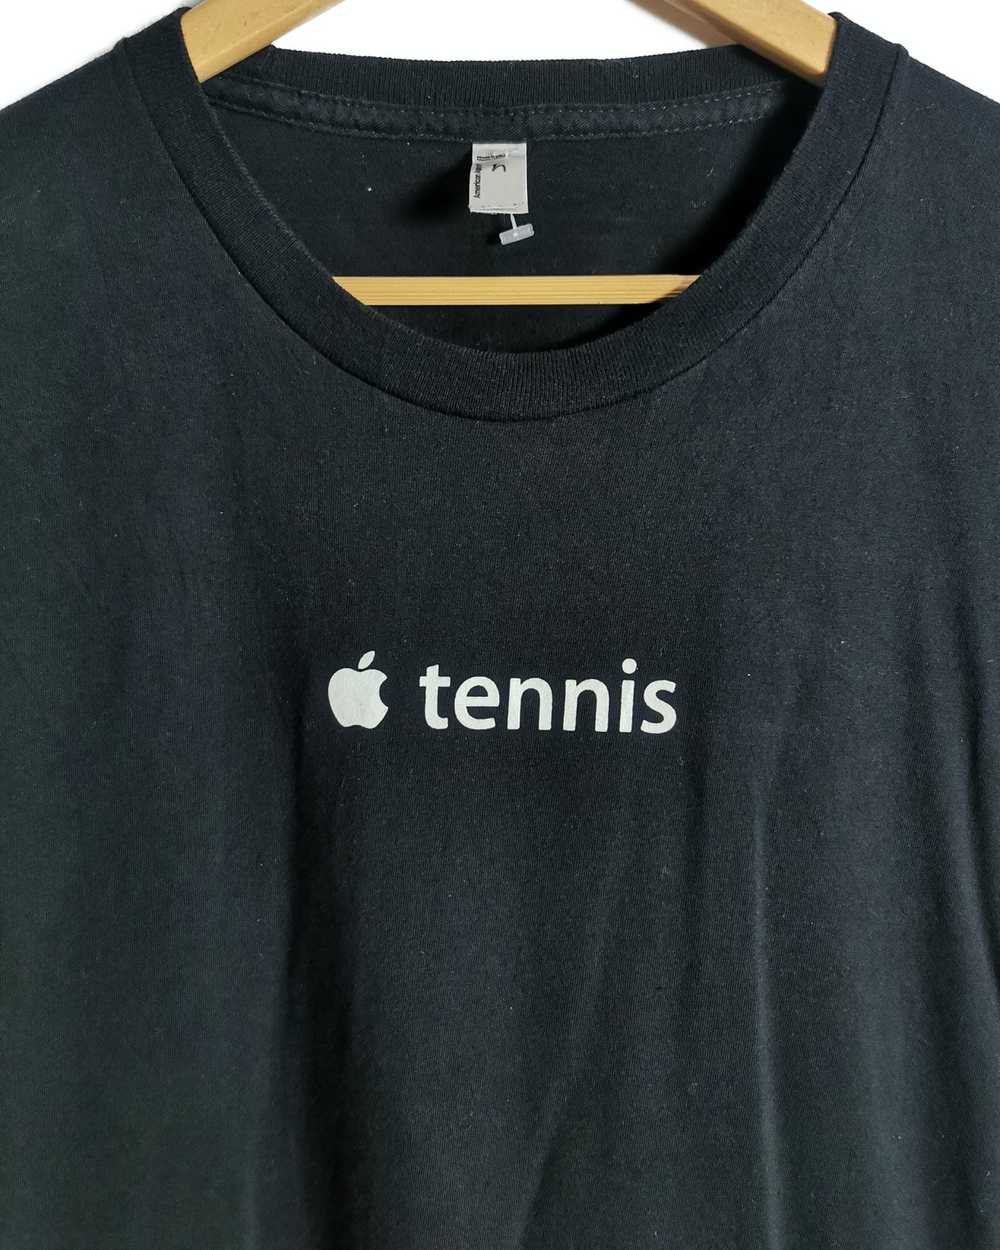 Apple Apple Inc iphone iMac Apple Tennis T shirt - image 3